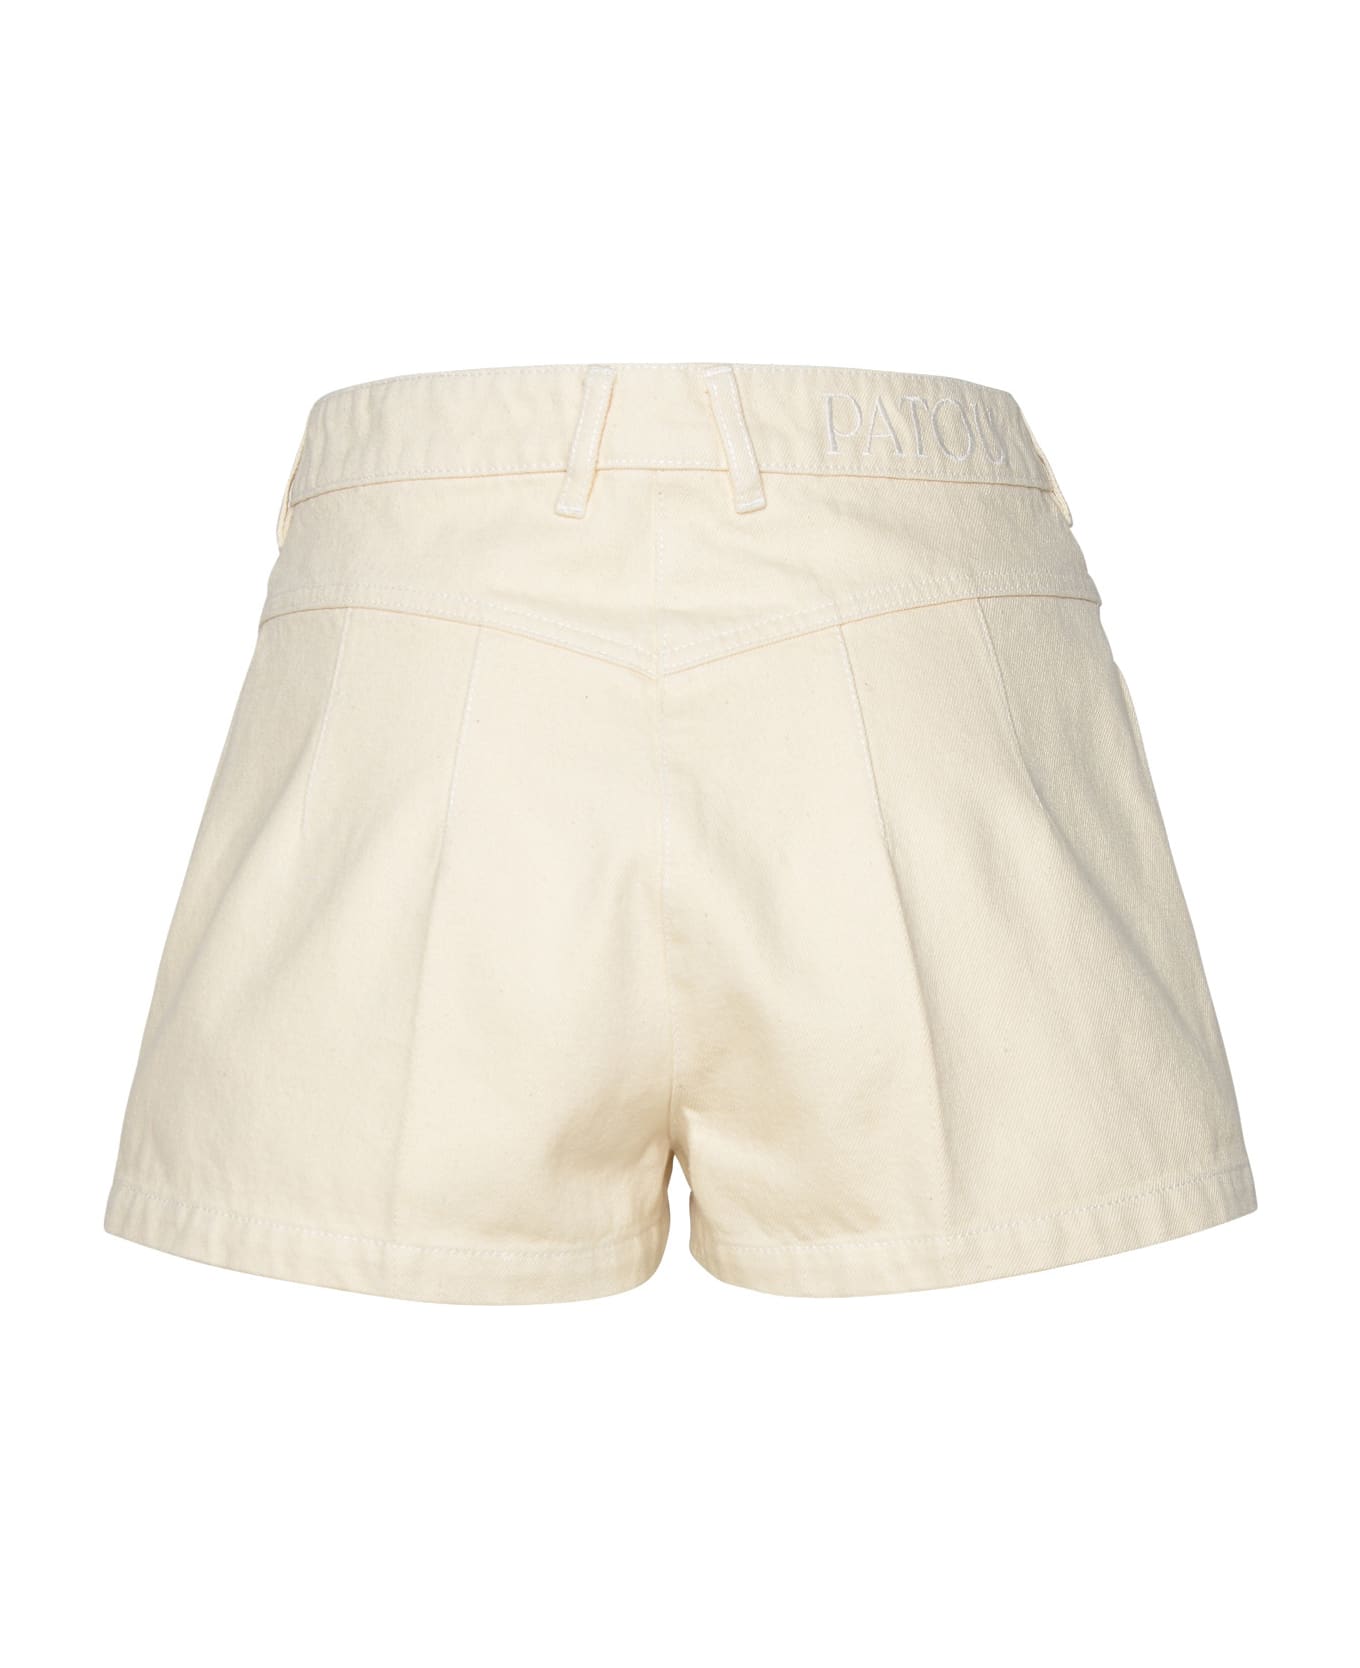 Patou Ivory Cotton Mini Shorts - Ivory ショートパンツ